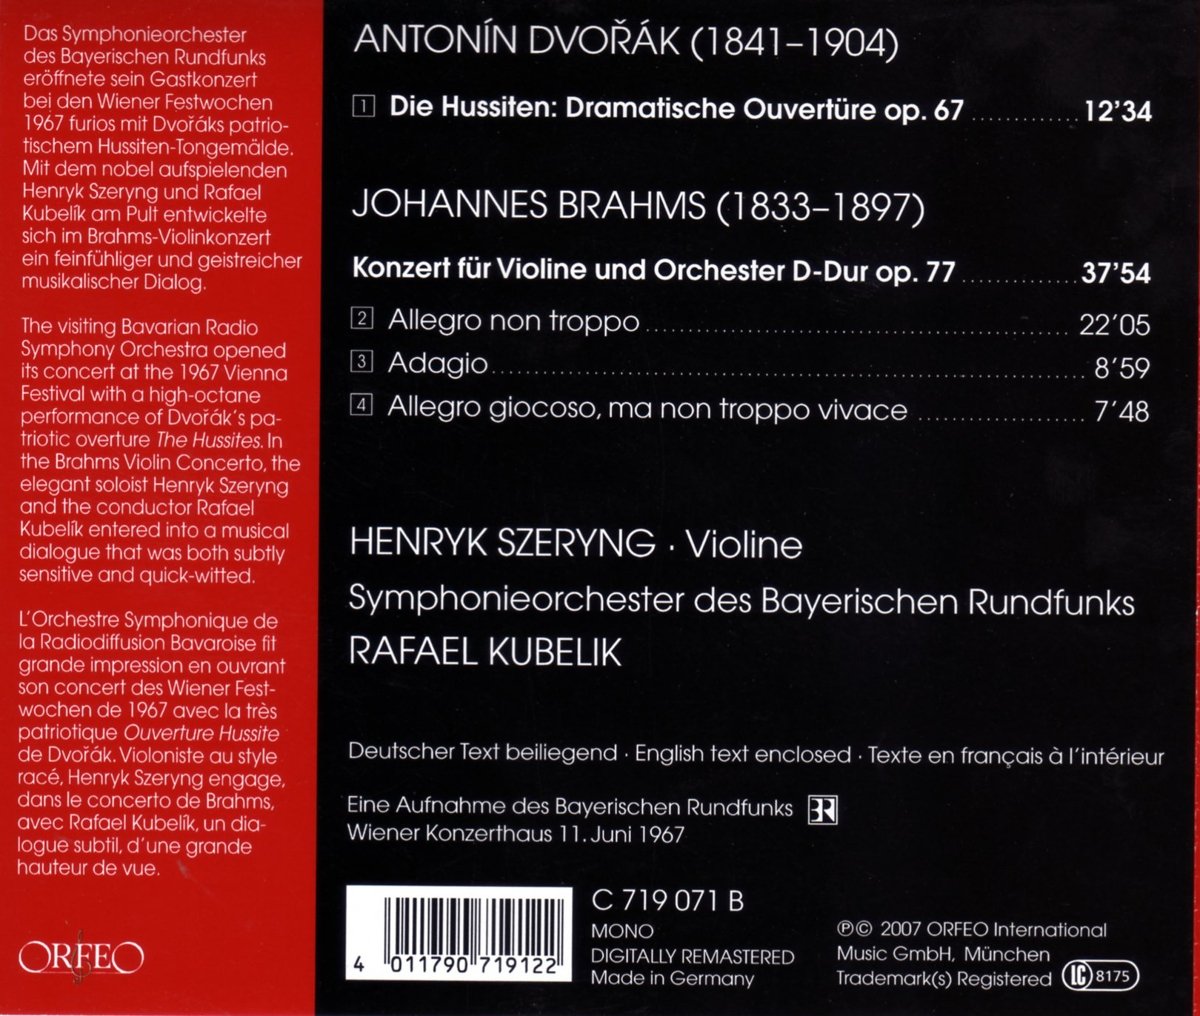 Henryk Szeryng 브람스: 바이올린 협주곡 - 헨릭 셰링